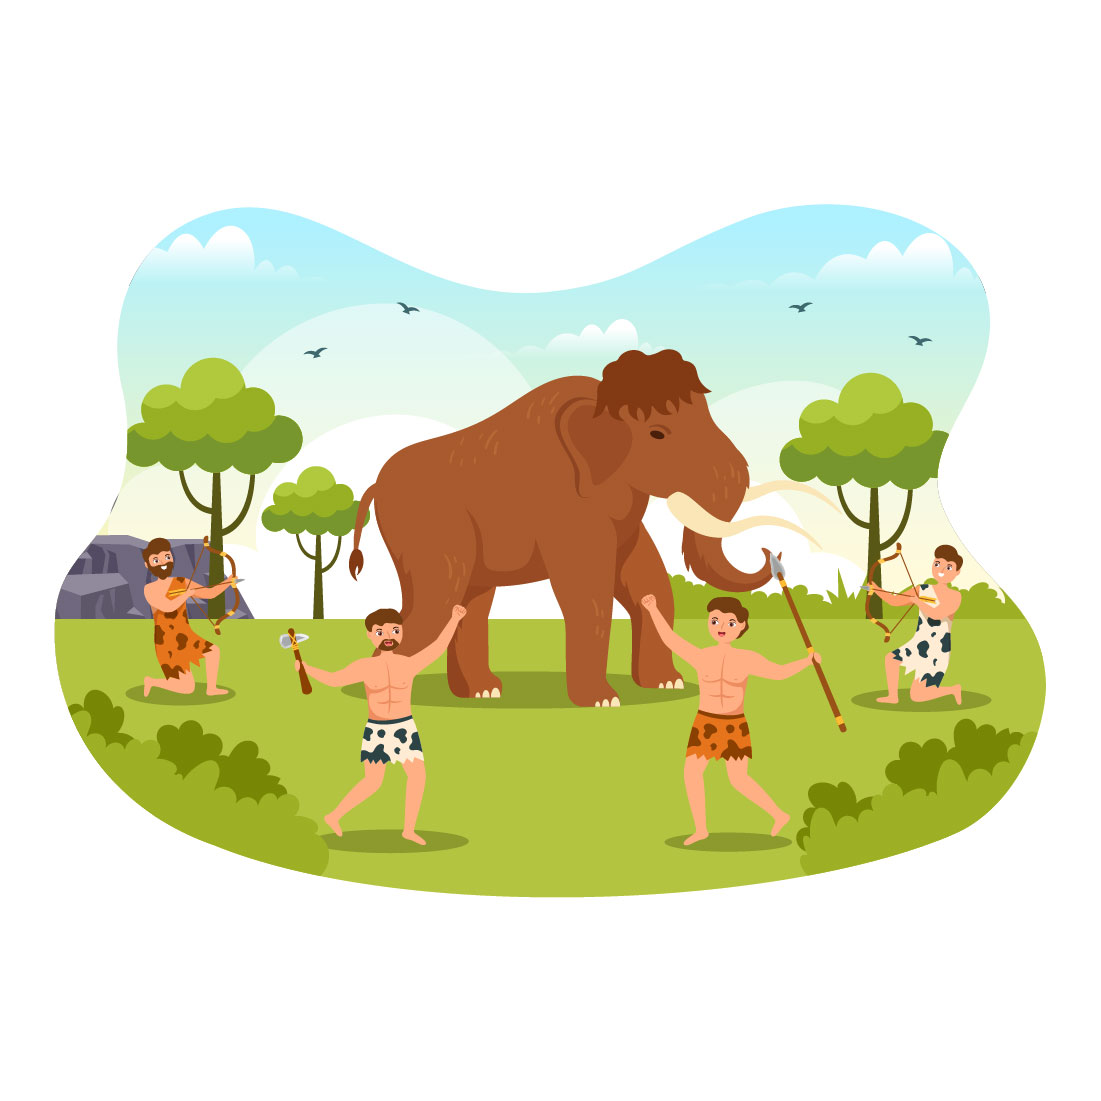 Wild Animals Hunting Cartoon Illustration cover image.